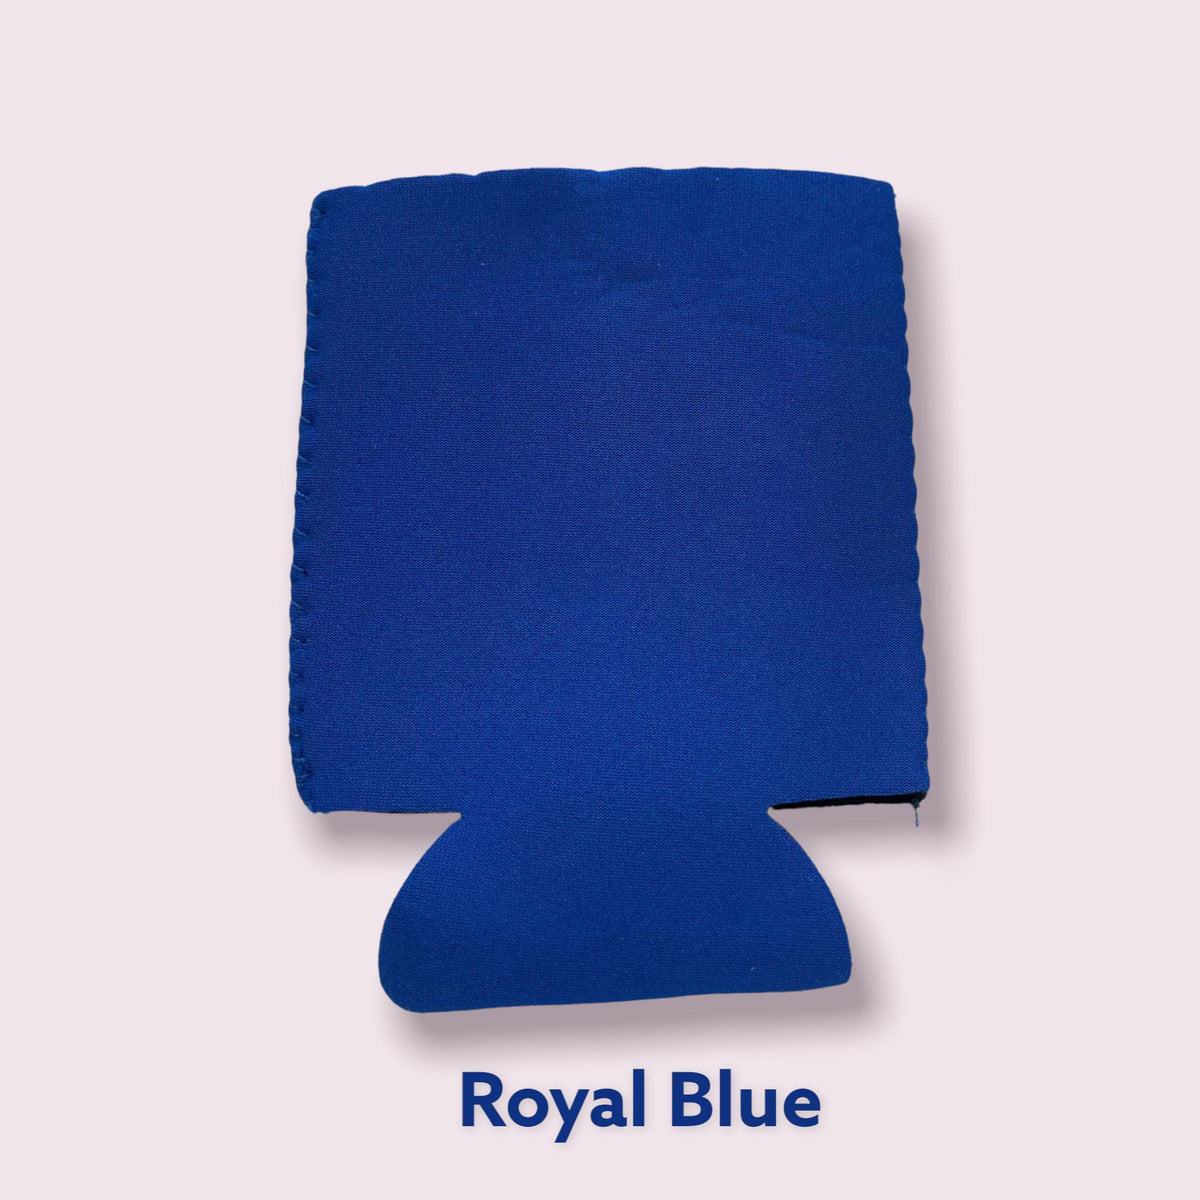 Can Koozies -Royal Blue